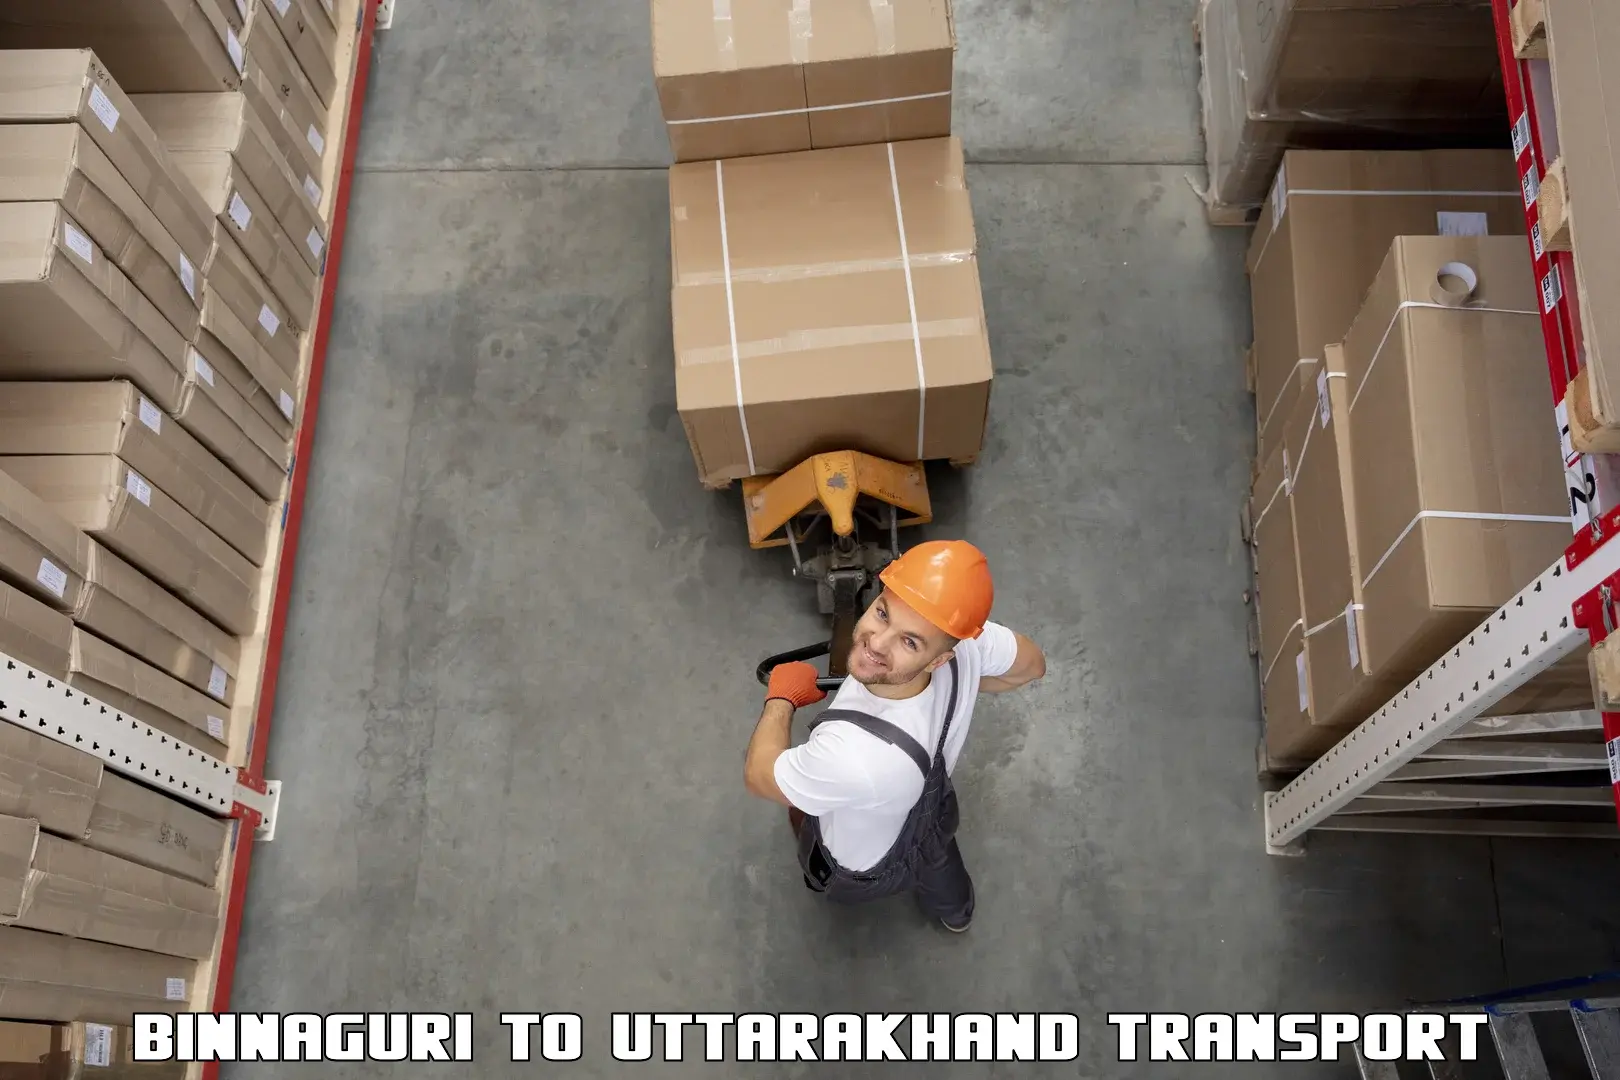 Truck transport companies in India Binnaguri to Uttarakhand